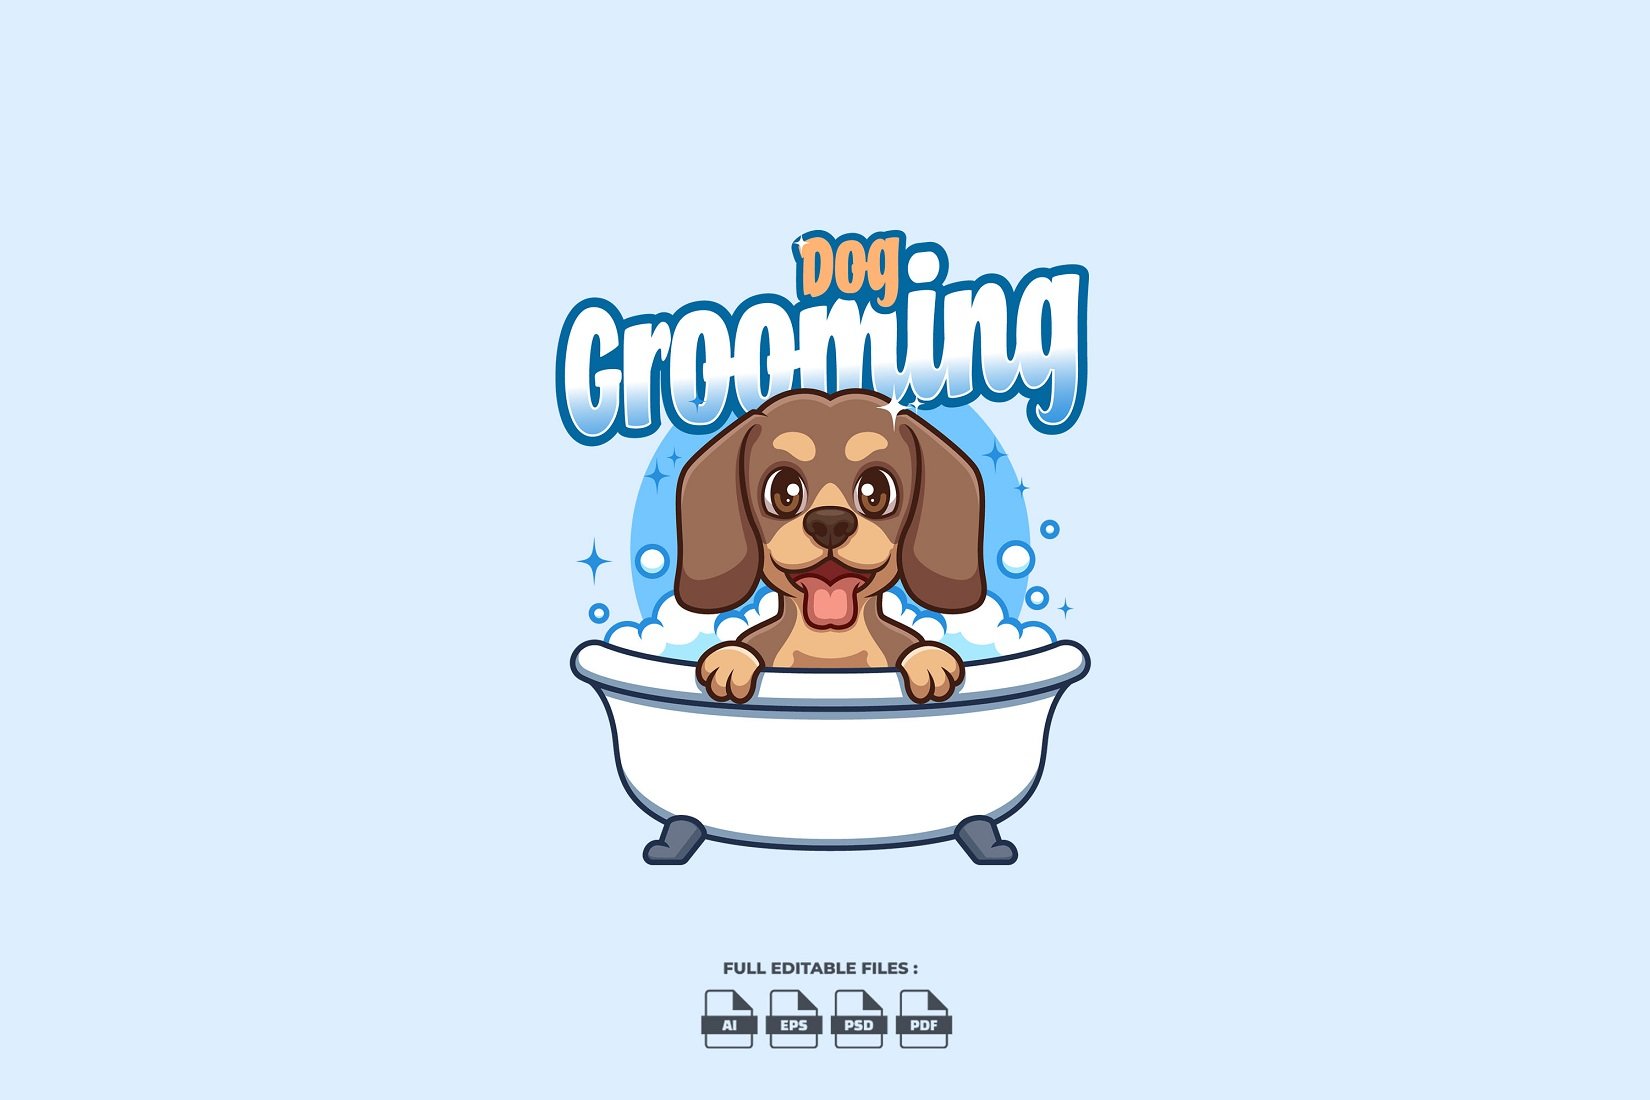 Dog Grooming Creative Cartoon Logo cover image.